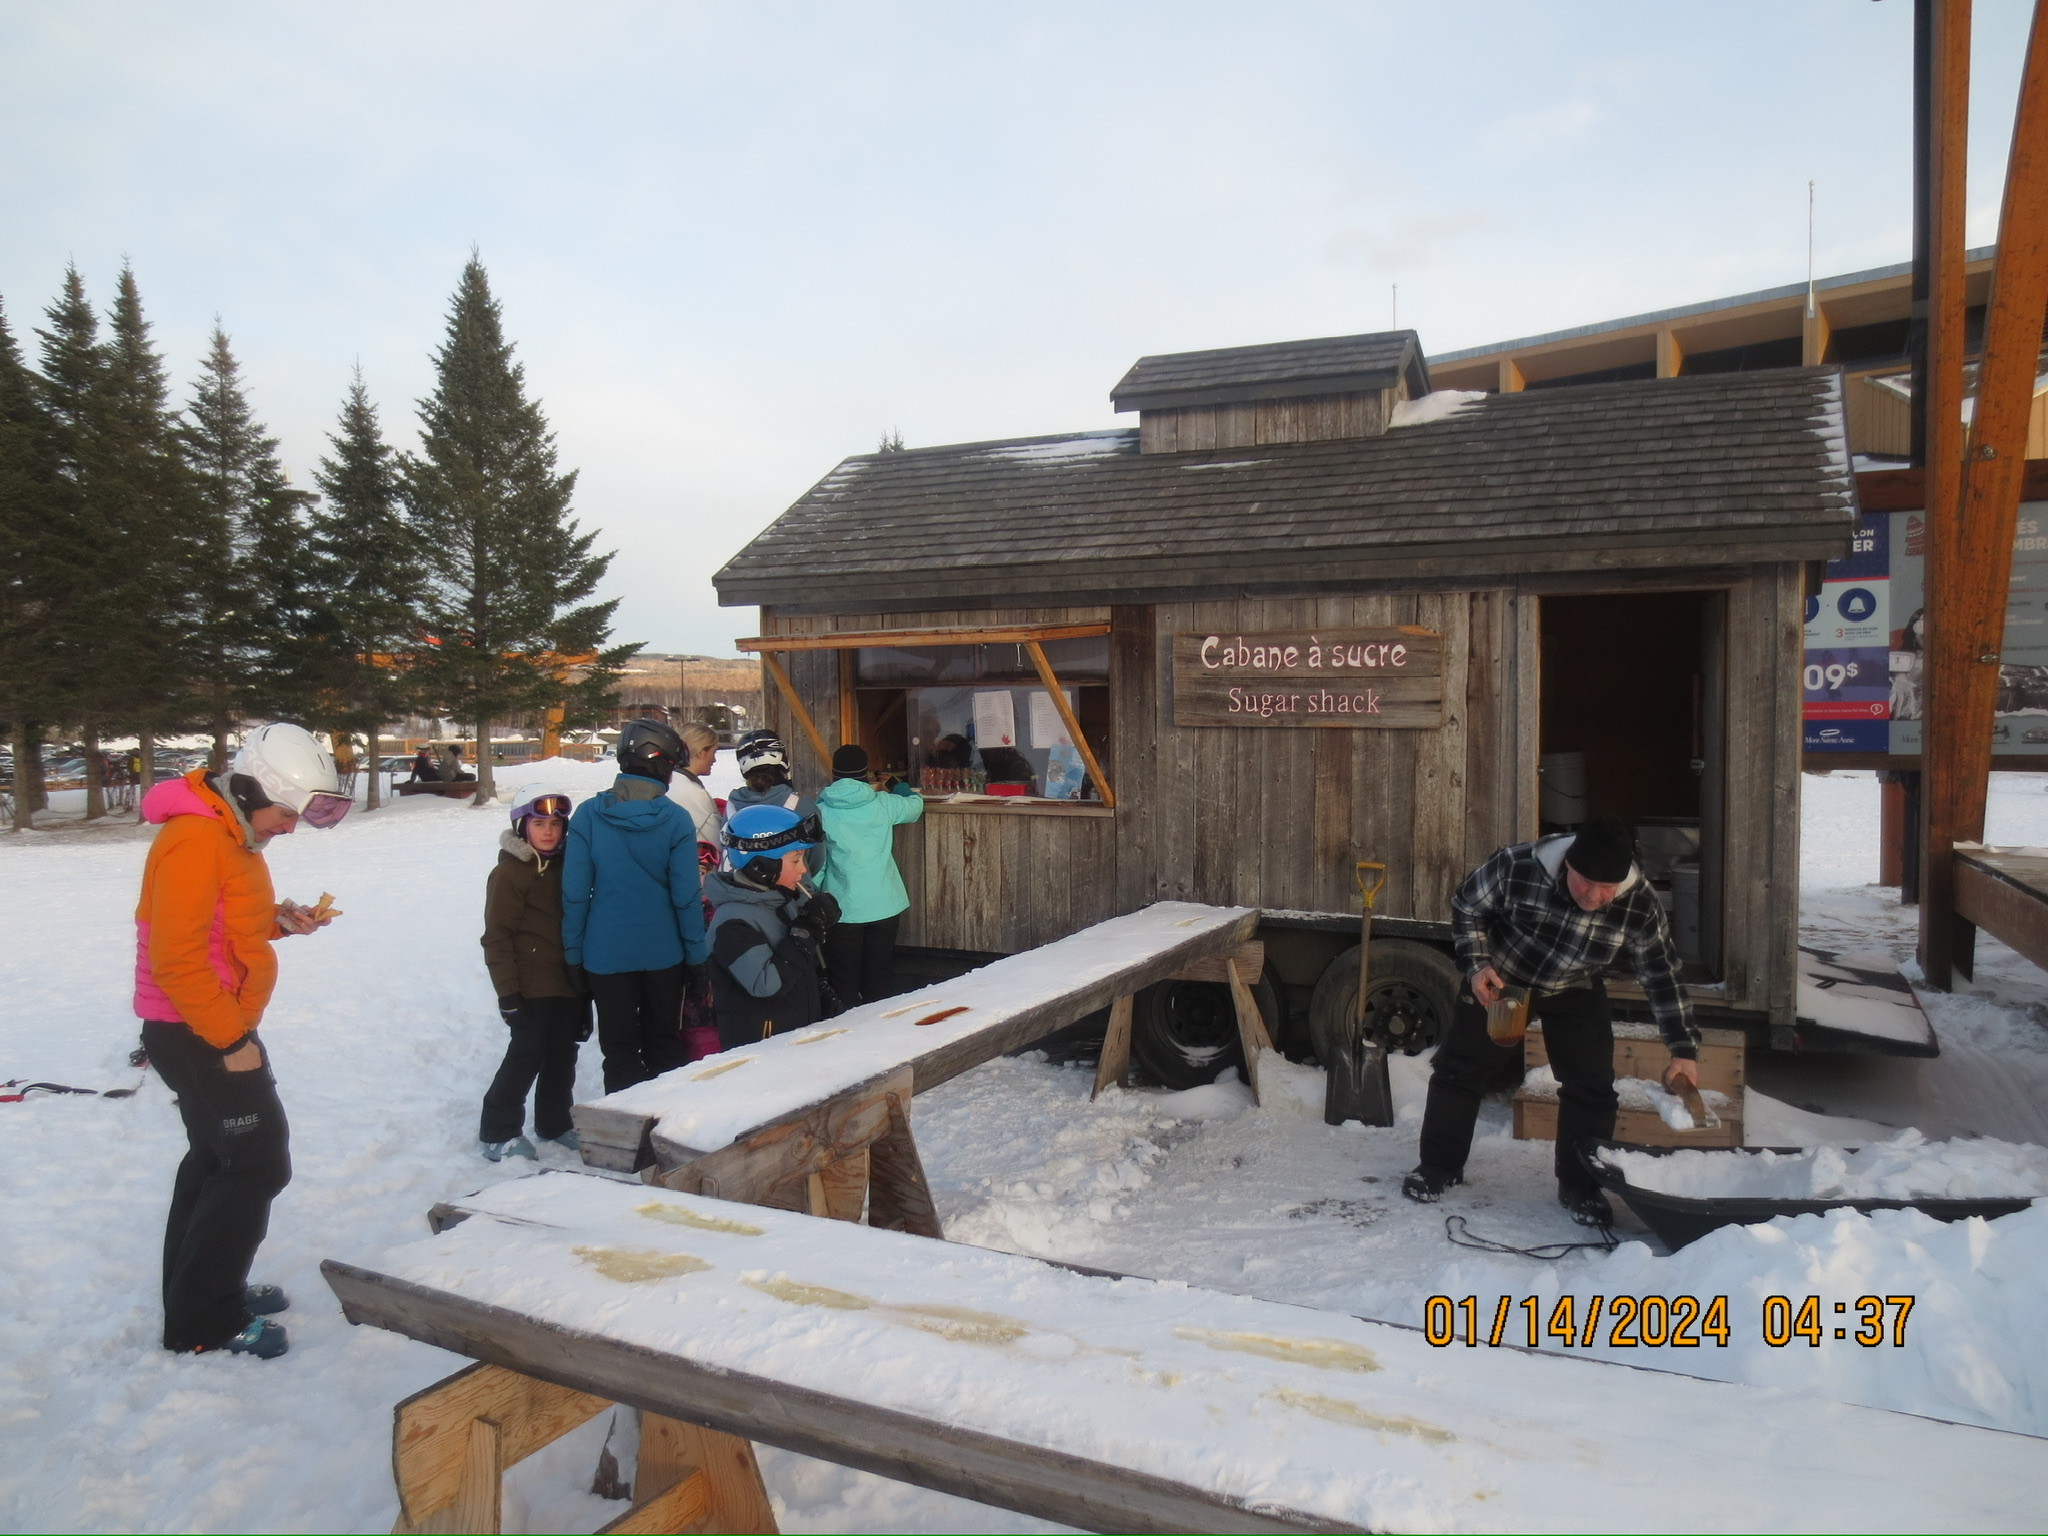 Students+embark+on+ski+trip+in+Canada